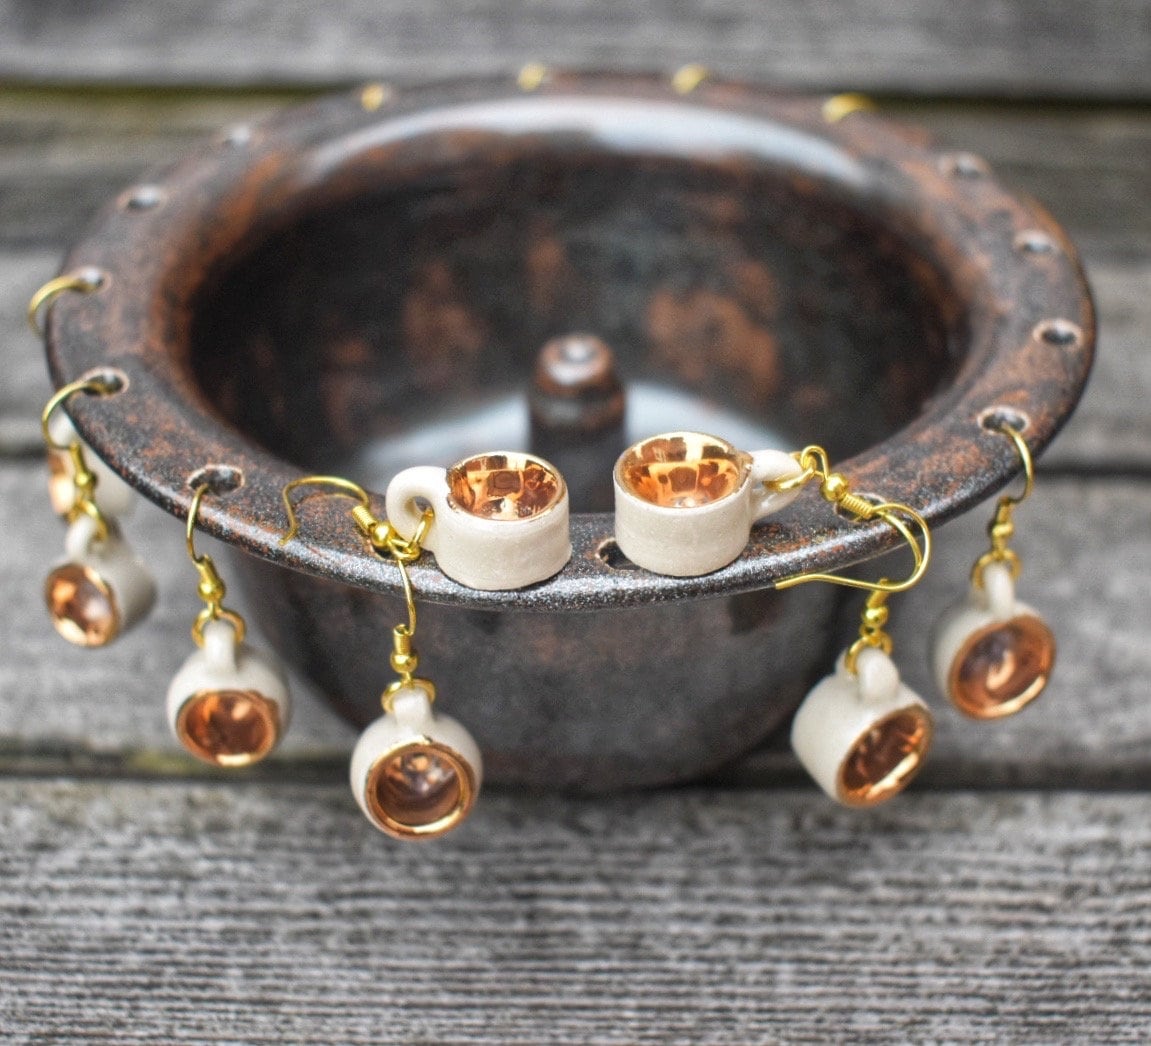 Micro Mug Earrings, White & Gold Mini Pottery Teacup drop earrings, unique gift, miniature ceramic jewelry/jewellery, wheel-thrown stoneware